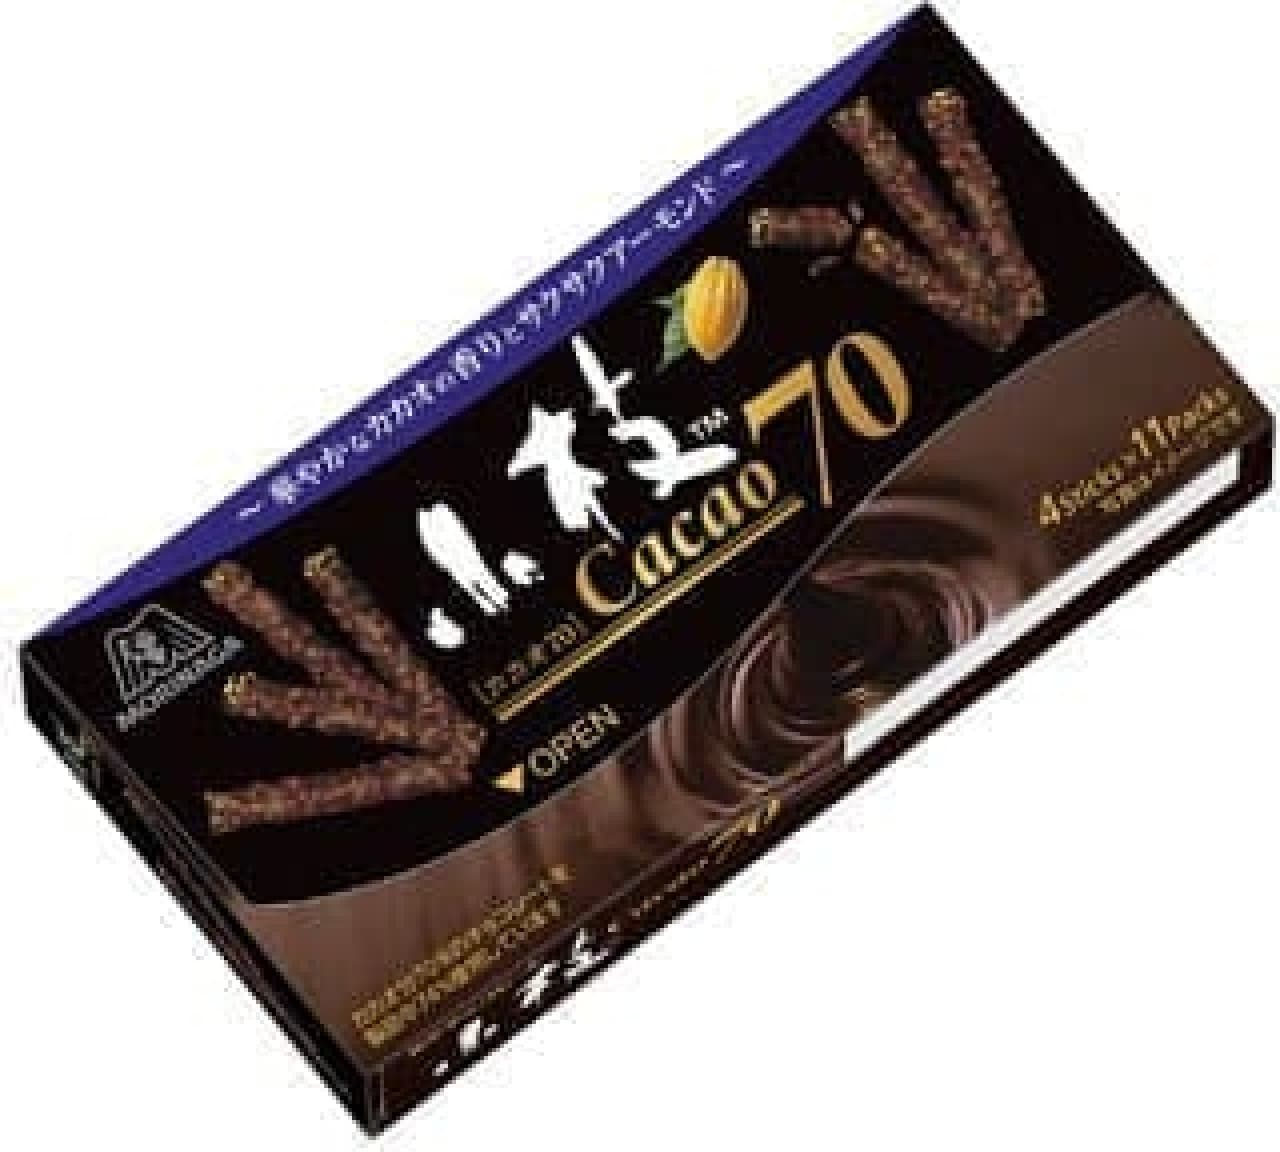 Morinaga & Co., Ltd. "Twig [Cacao 70]"